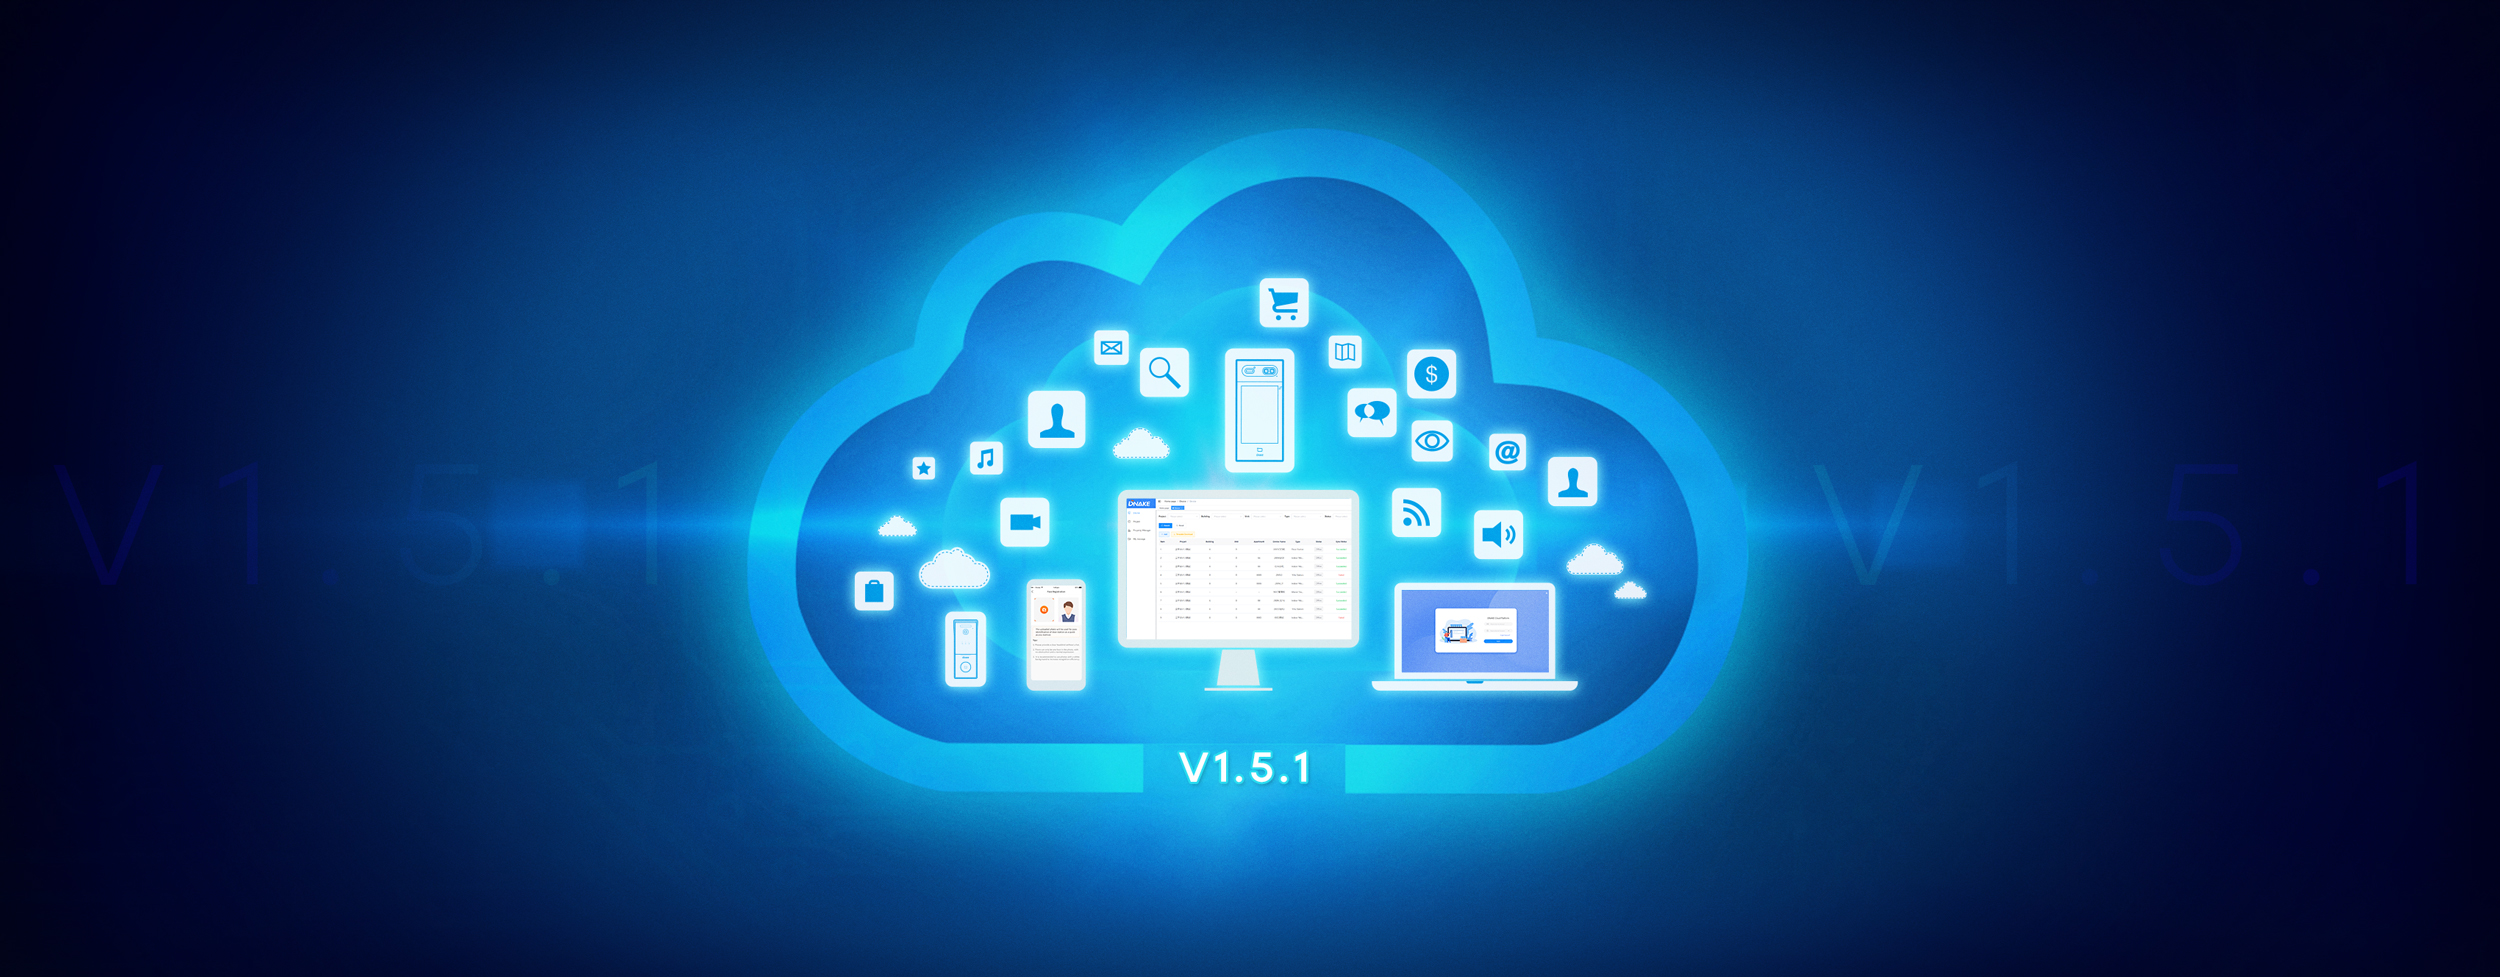 Cloud-Platform-V1.5.1 Баннер